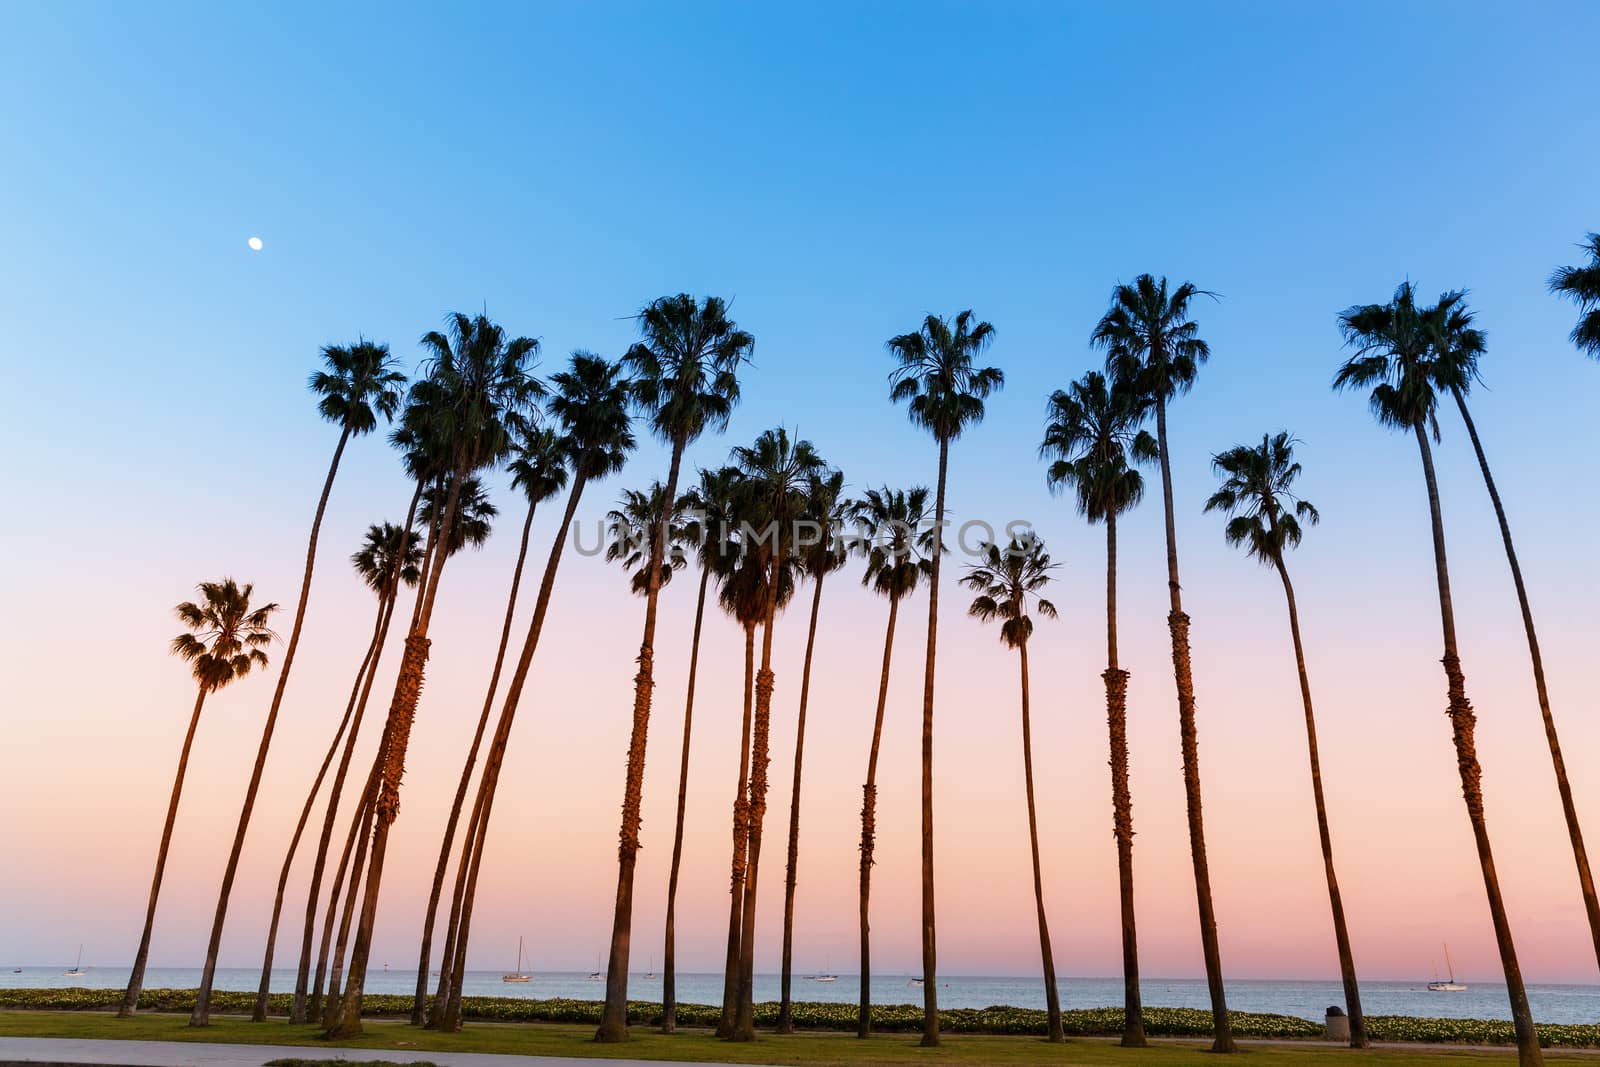 California sunset Palm tree rows in Santa Barbara by lunamarina